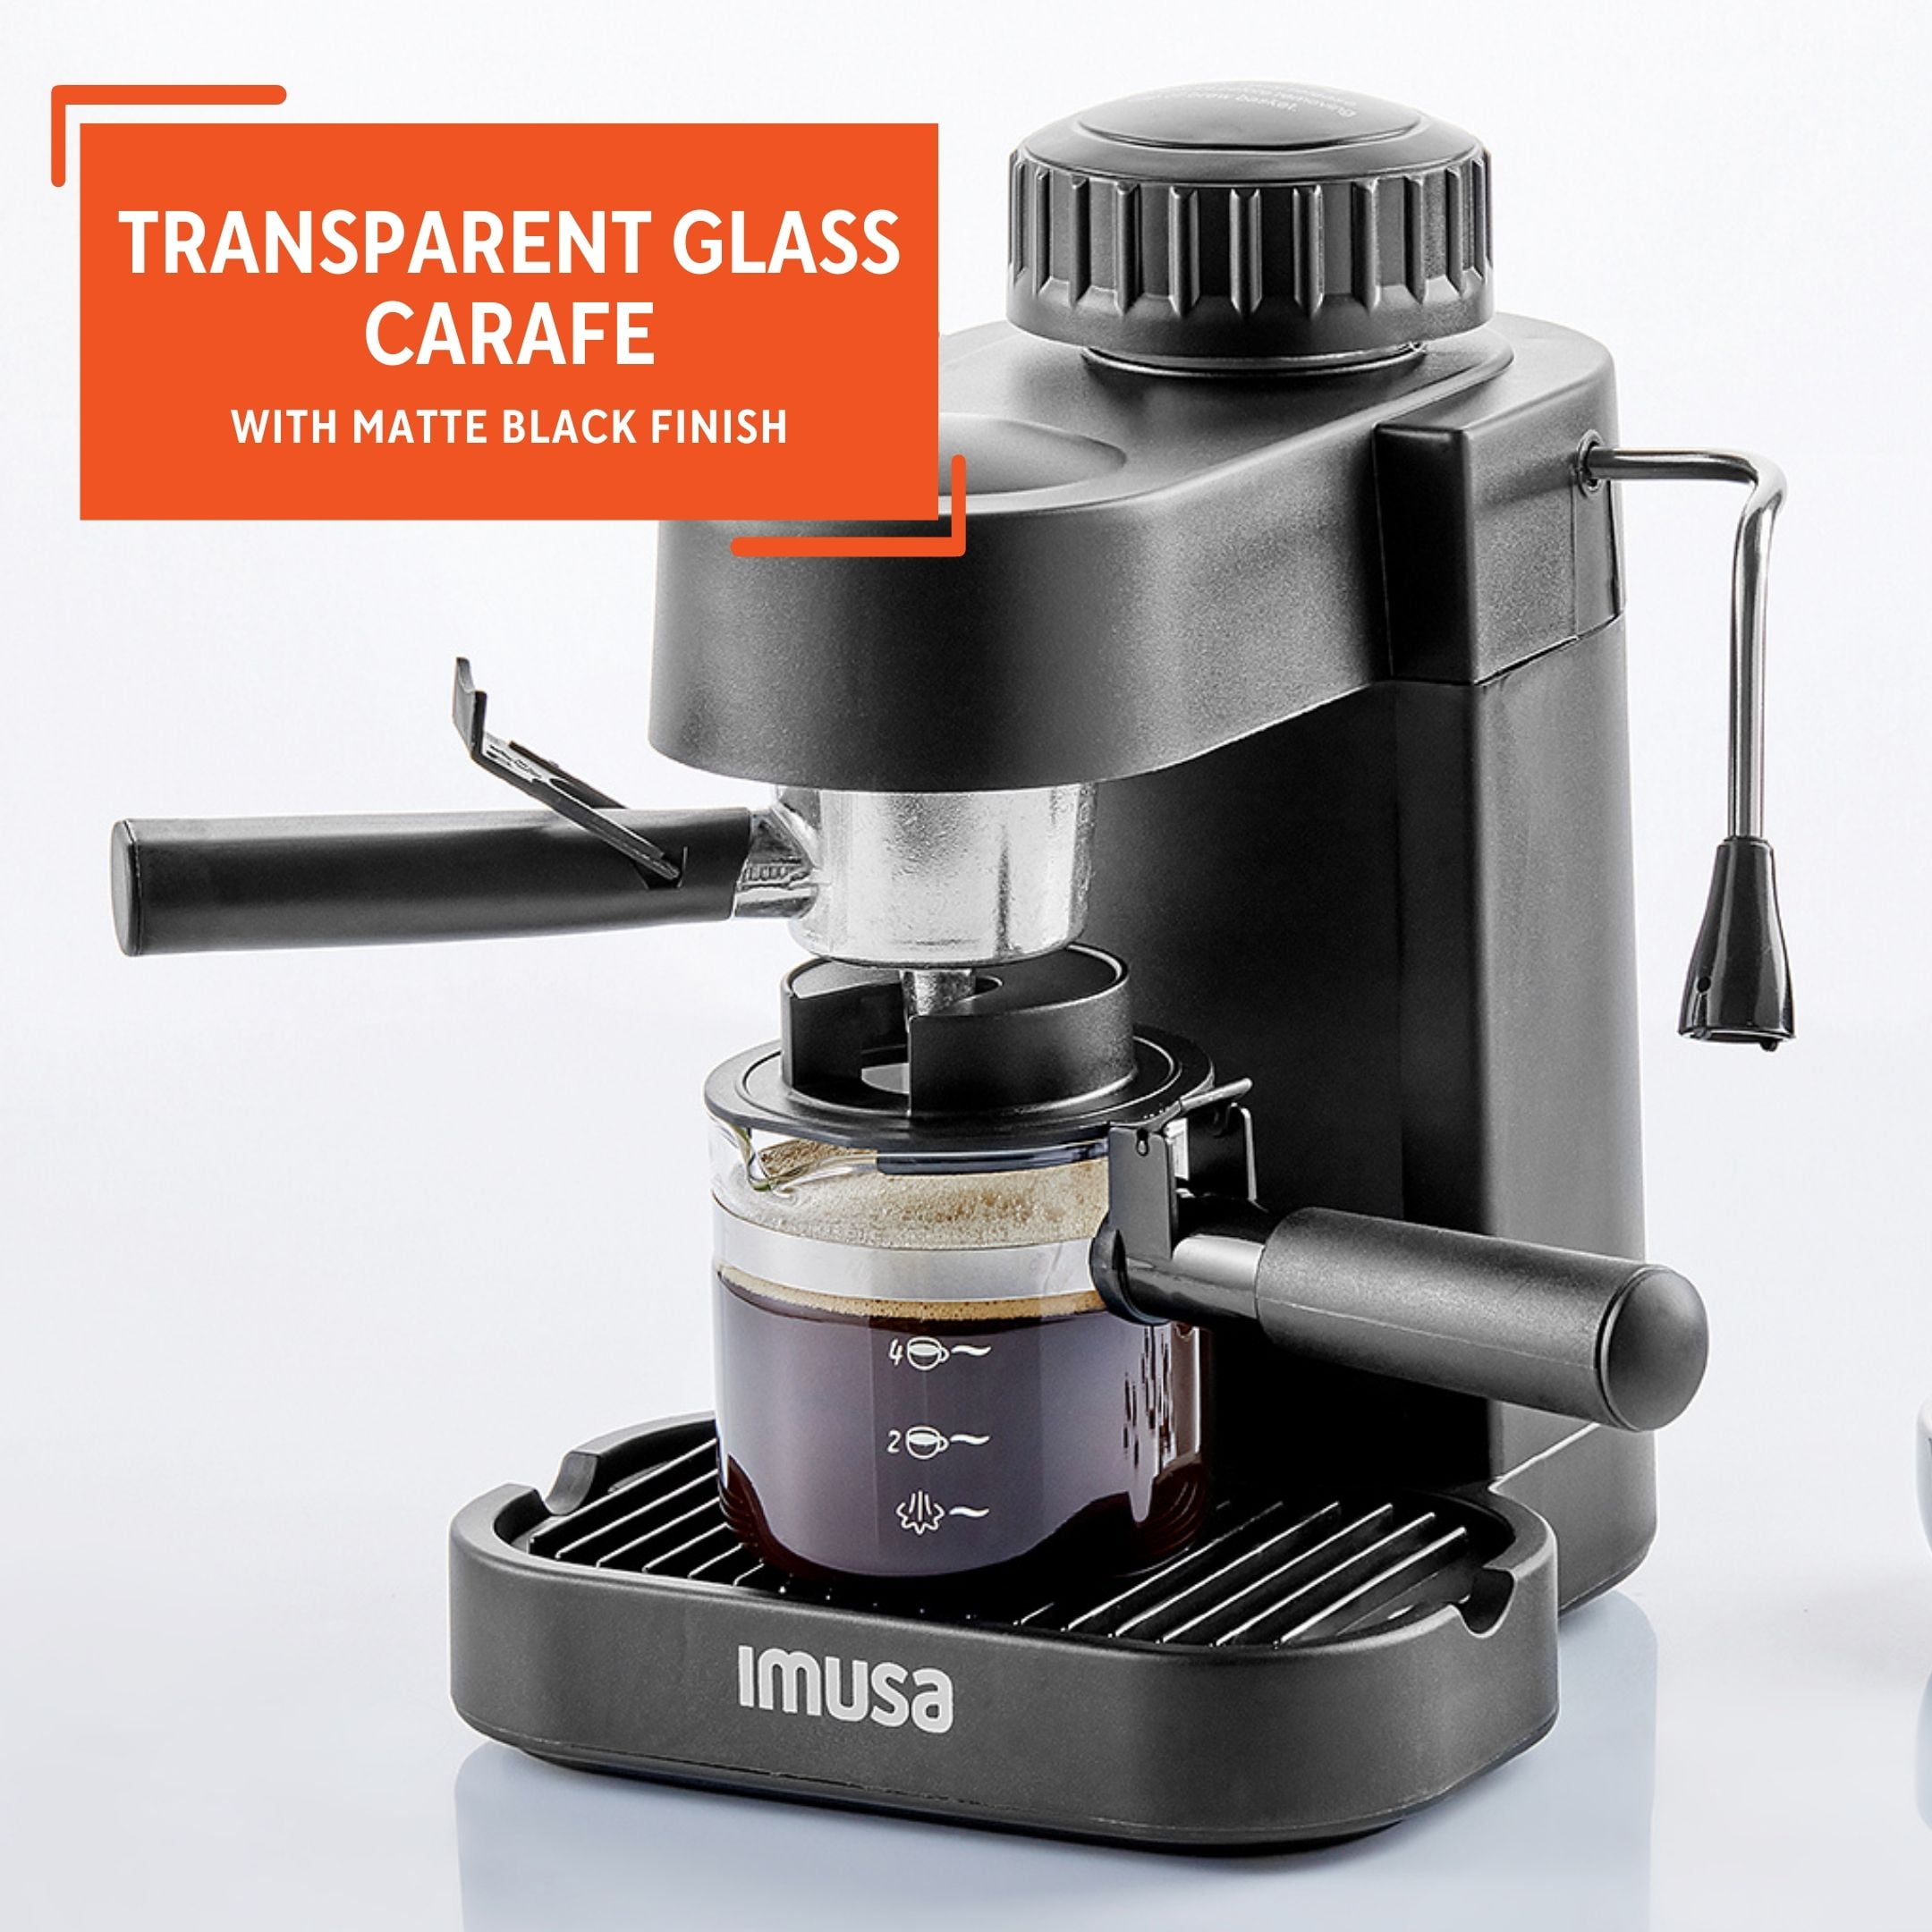 IMUSA 4 Cup Espresso/Cappuccino Maker - Bed Bath & Beyond - 36856120